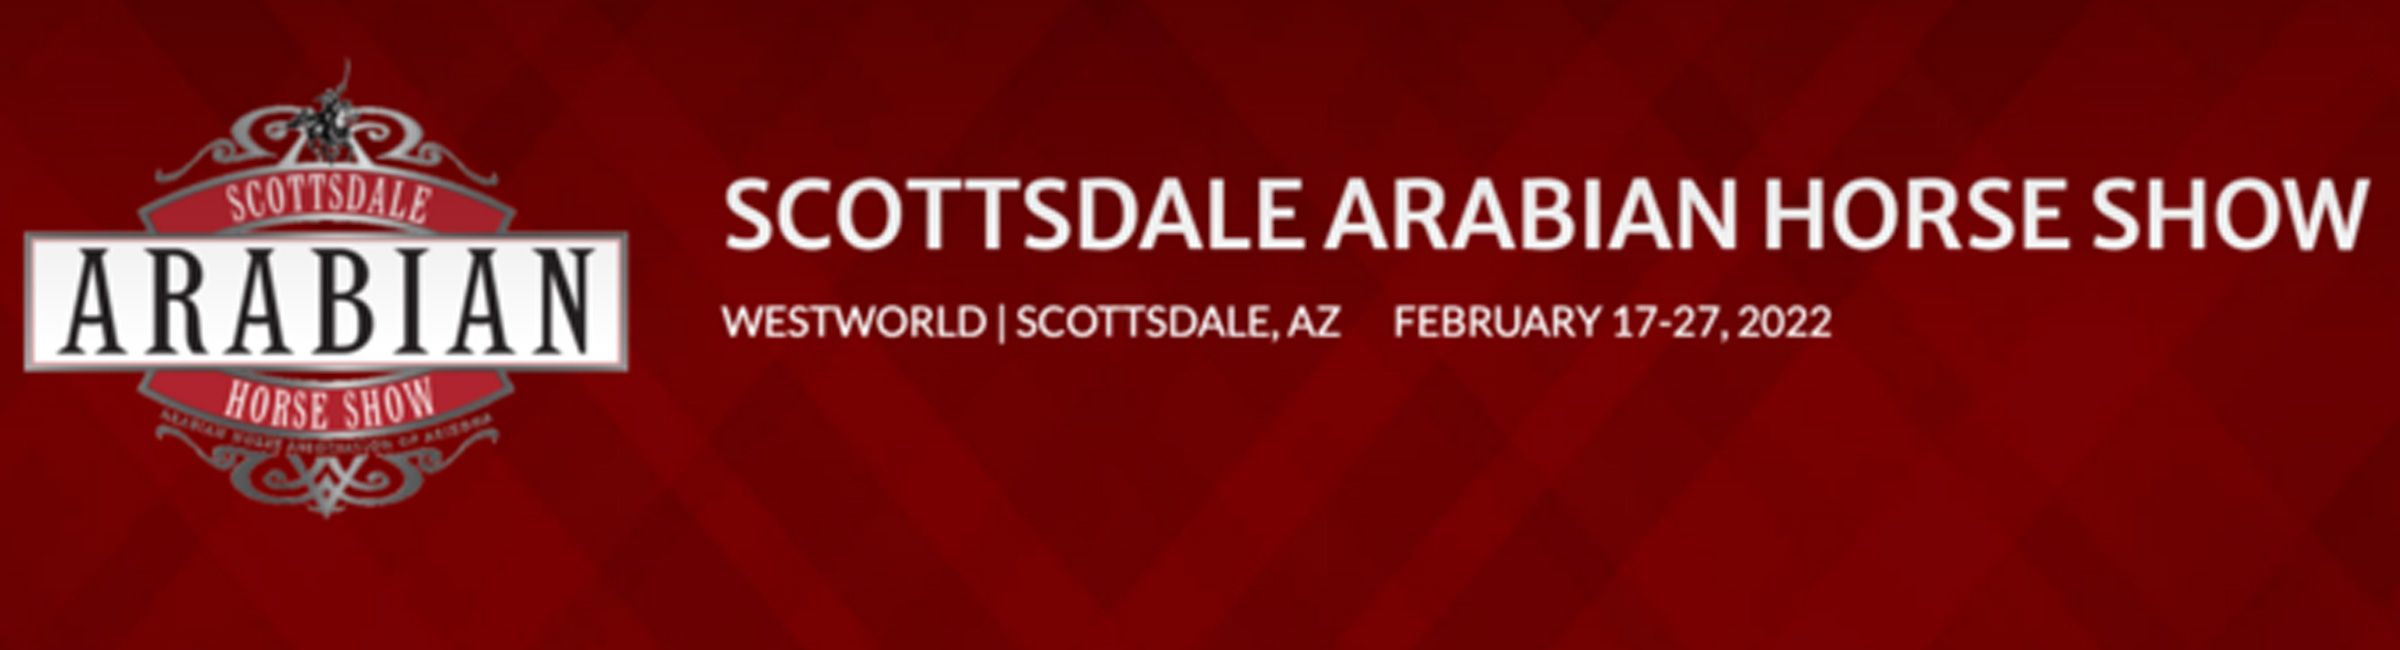 Scottsdale Arabian Horse Show, Westworld February 17 - 27, 2022